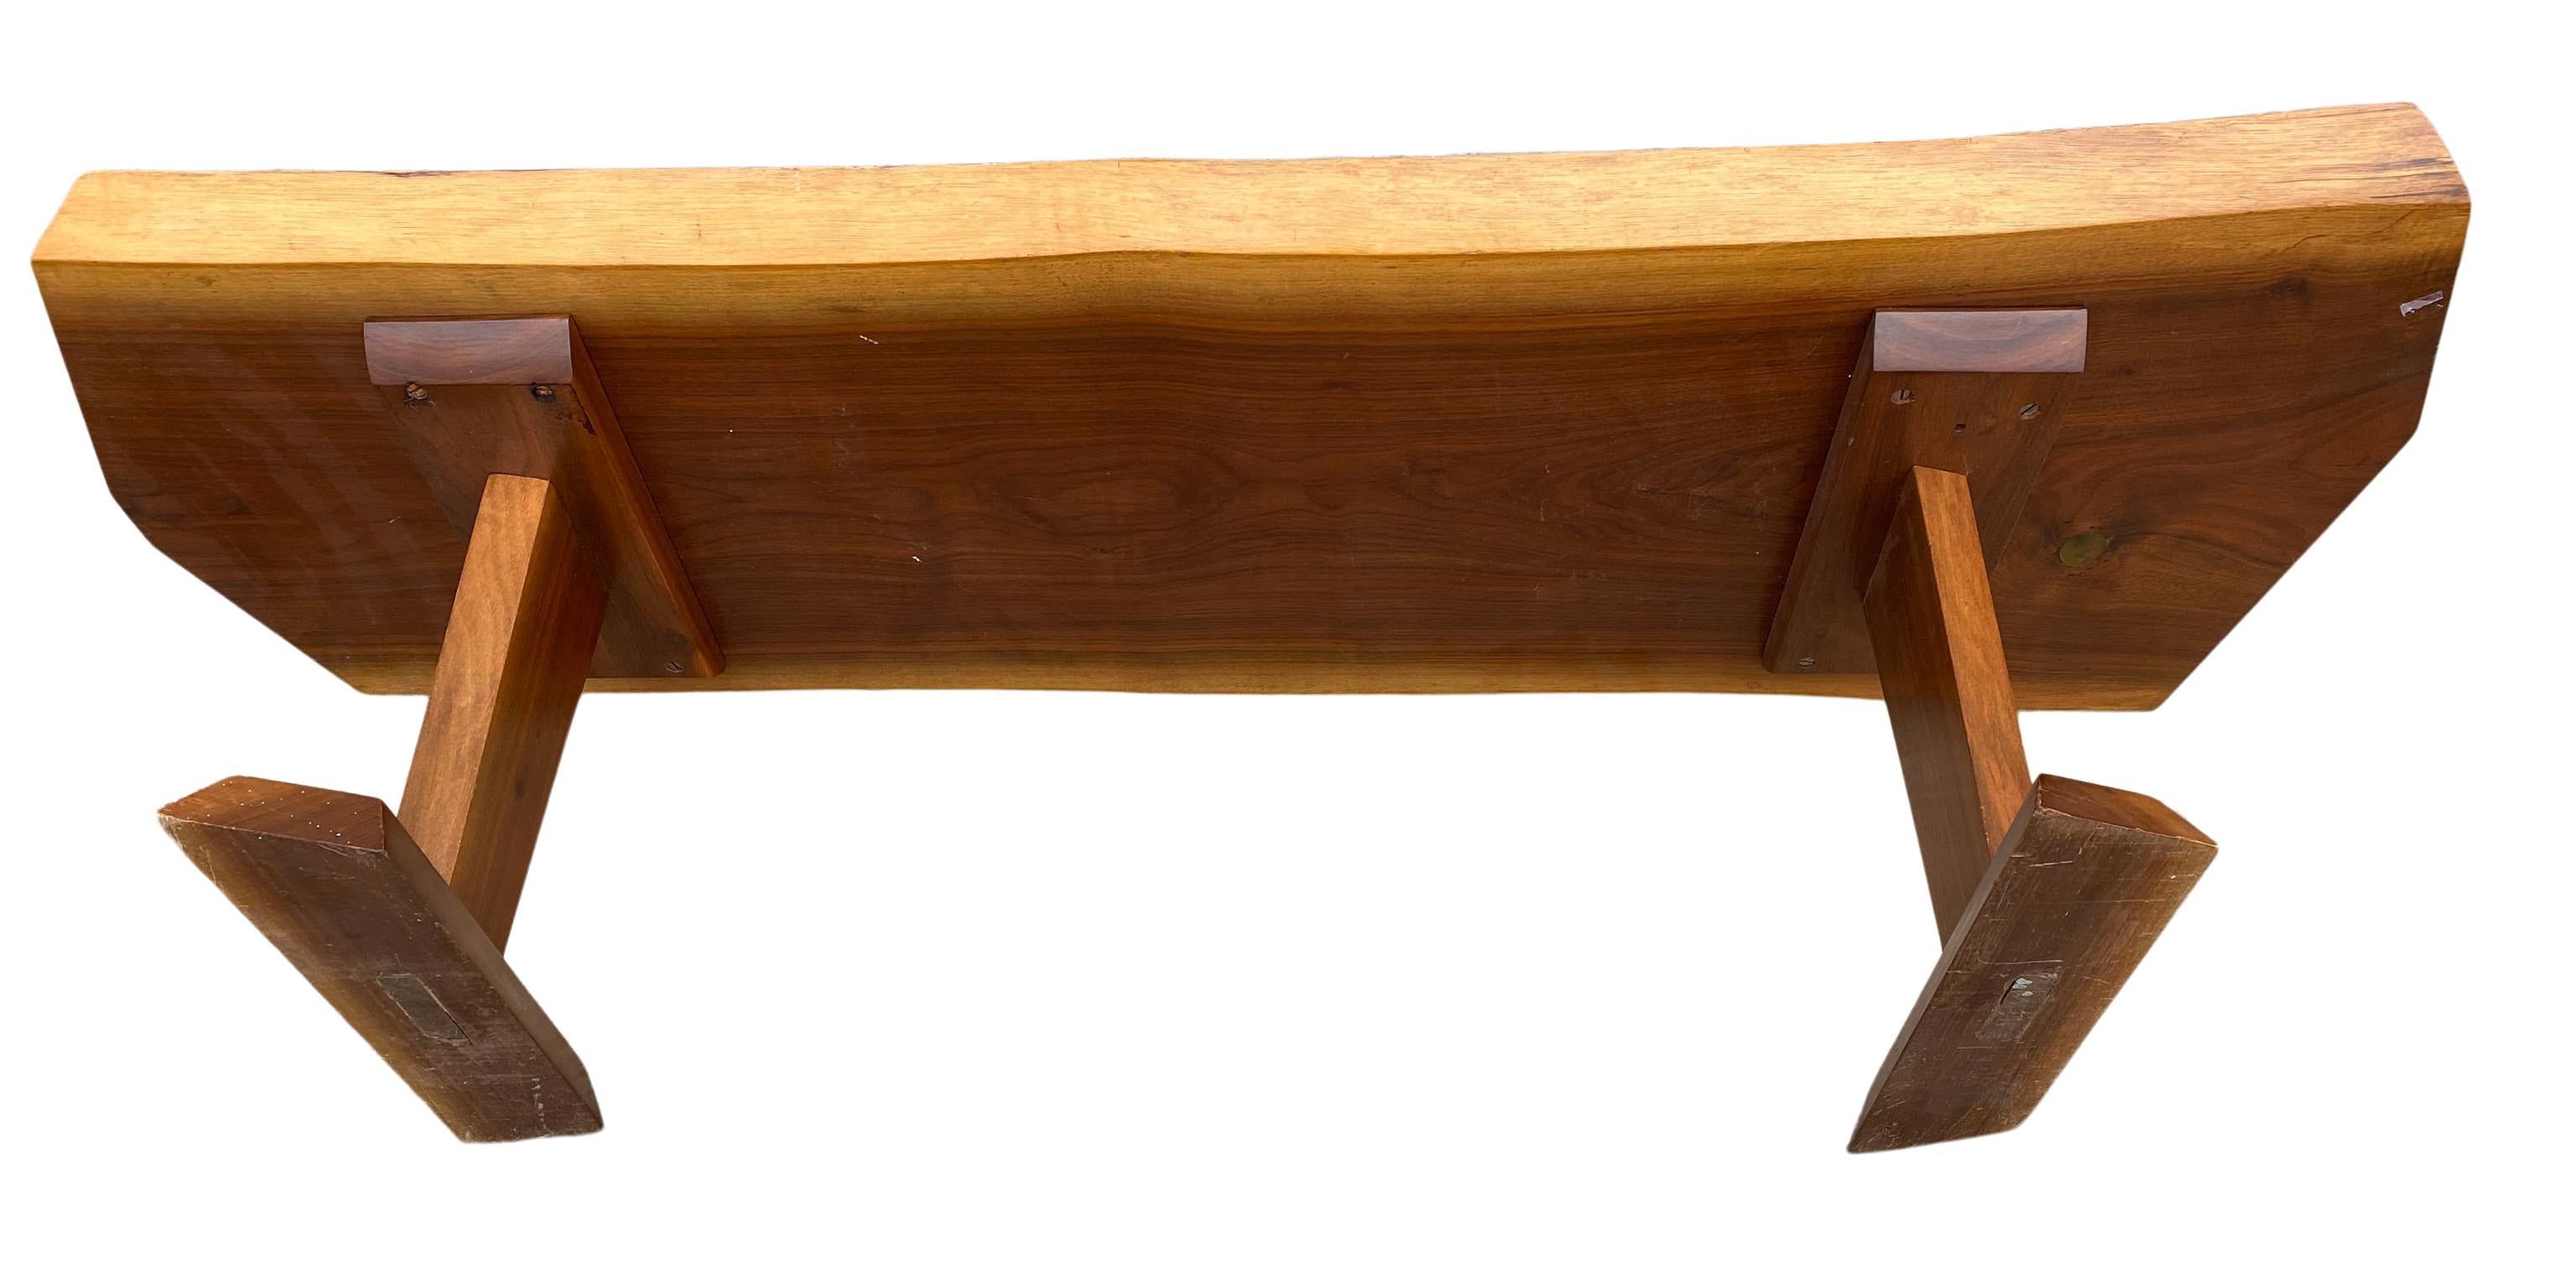 20th Century Midcentury Solid Walnut Studio Craft Coffee Table Bench Style of Nakashima